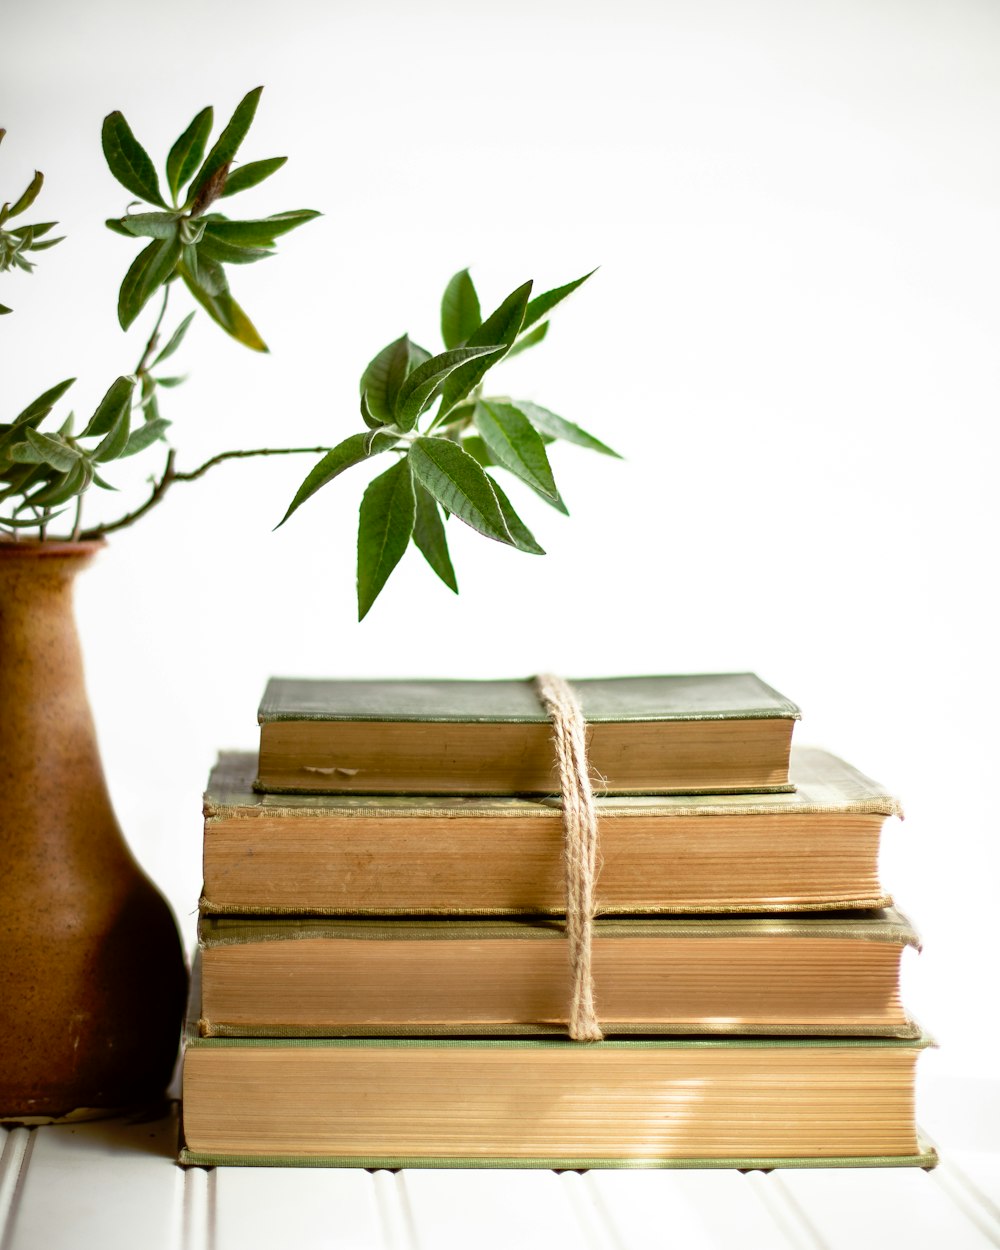 una pila di libri accanto a un vaso con una pianta